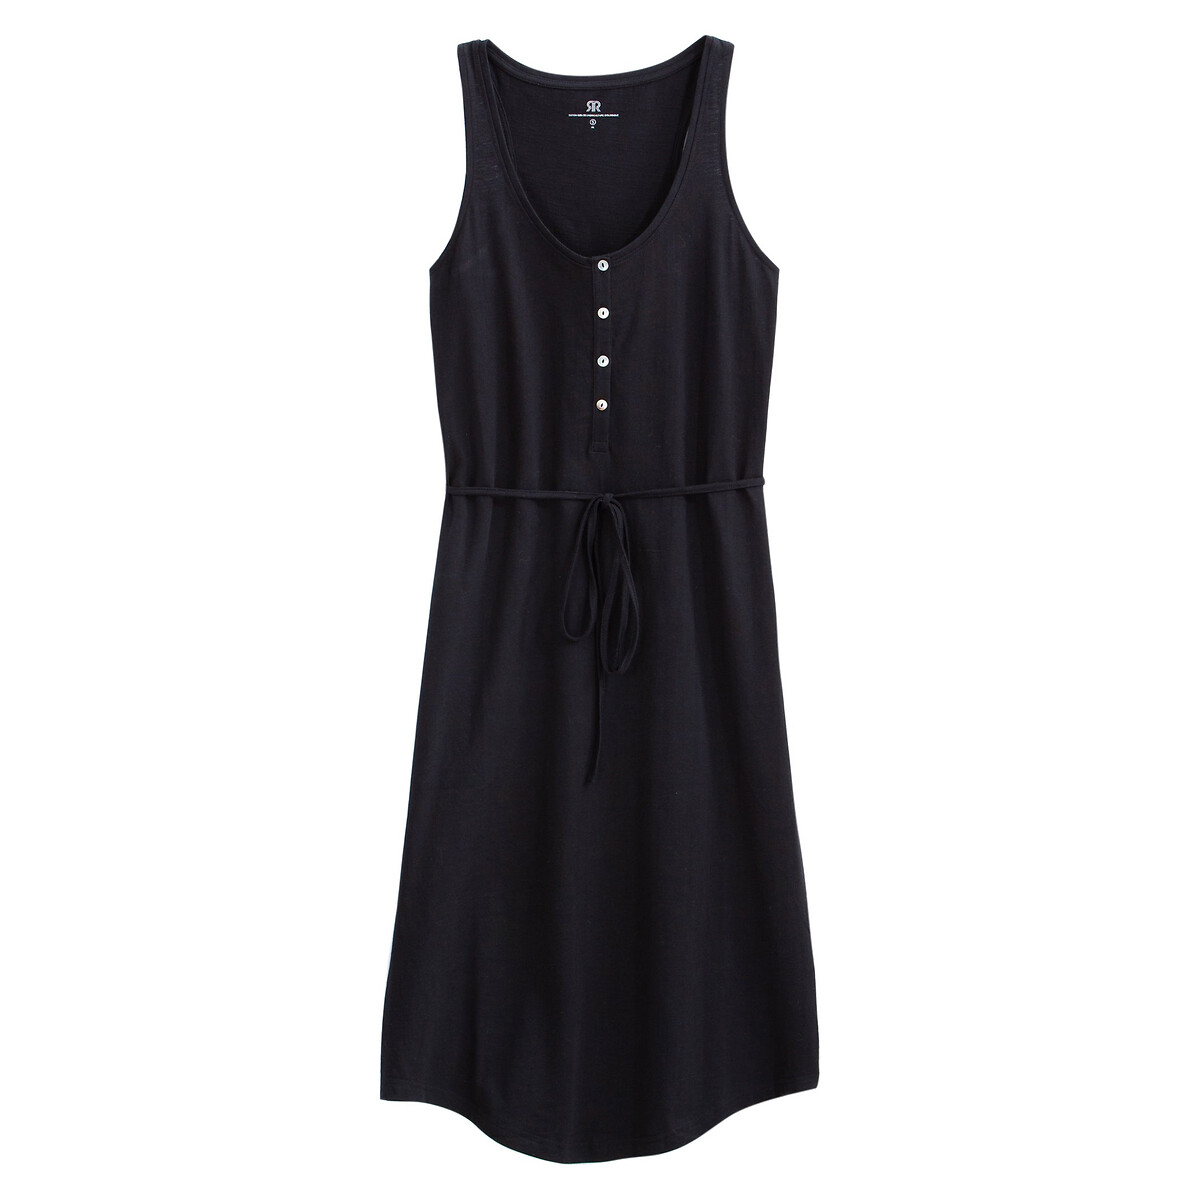 Платье La Redoute Без рукавов из трикотажа S черный, размер S - фото 5